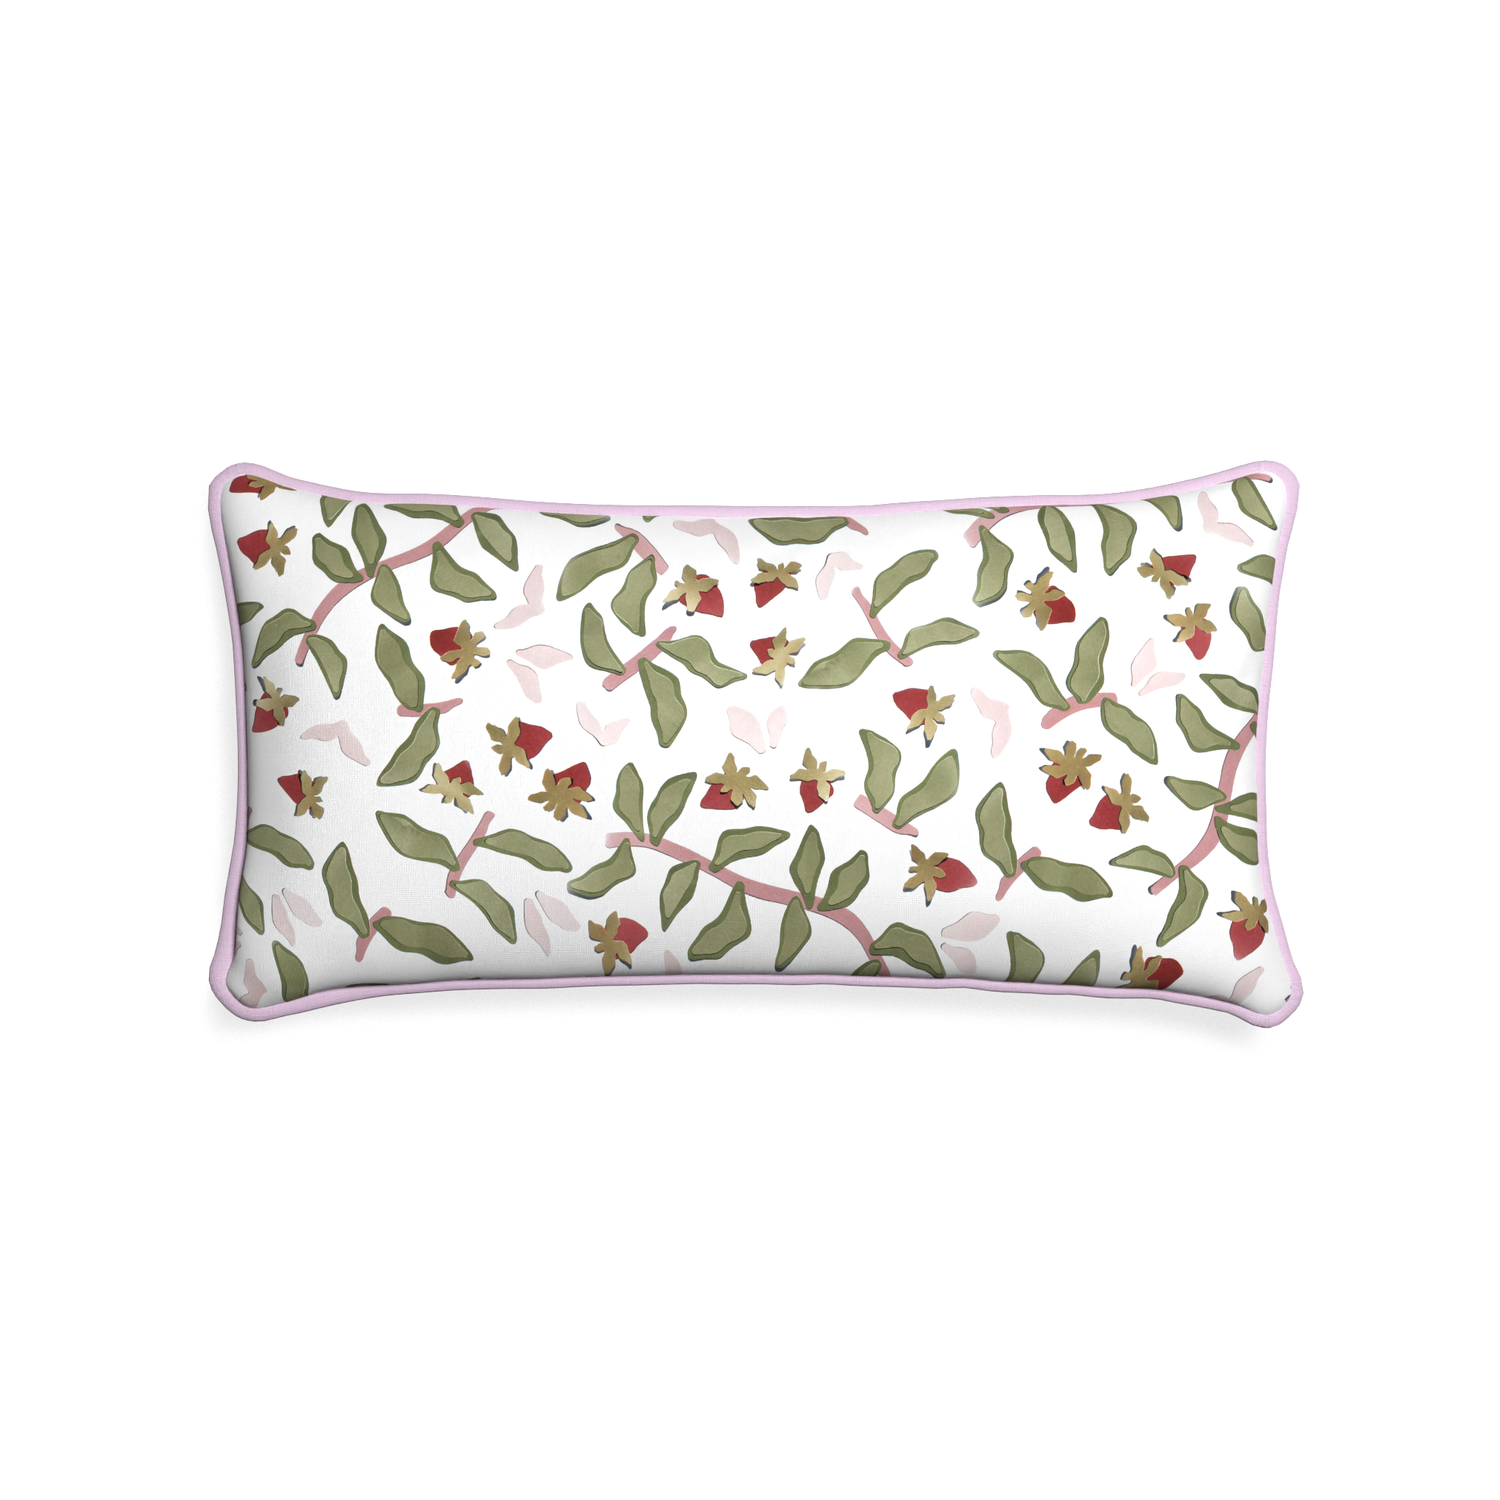 Midi-lumbar nellie custom strawberry & botanicalpillow with l piping on white background